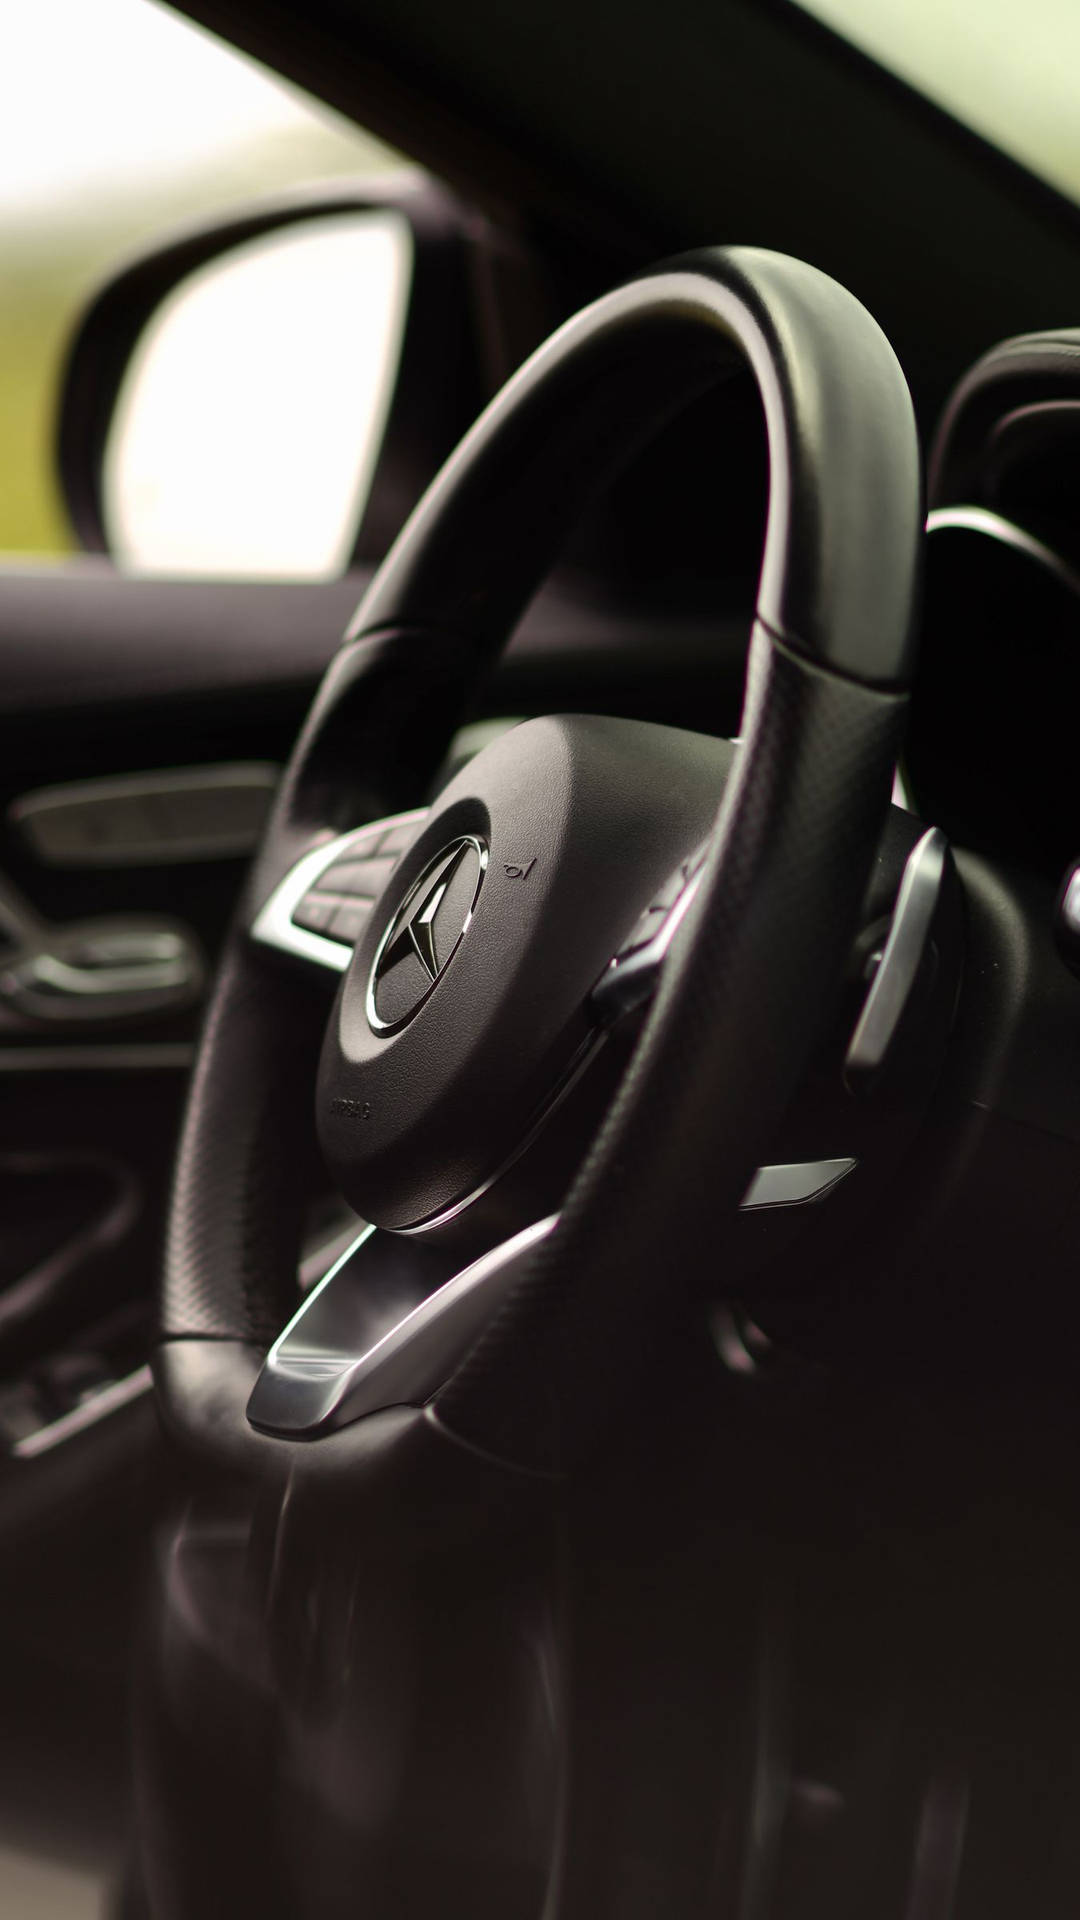 Mercedes Benz C300 Steering Wheel Background